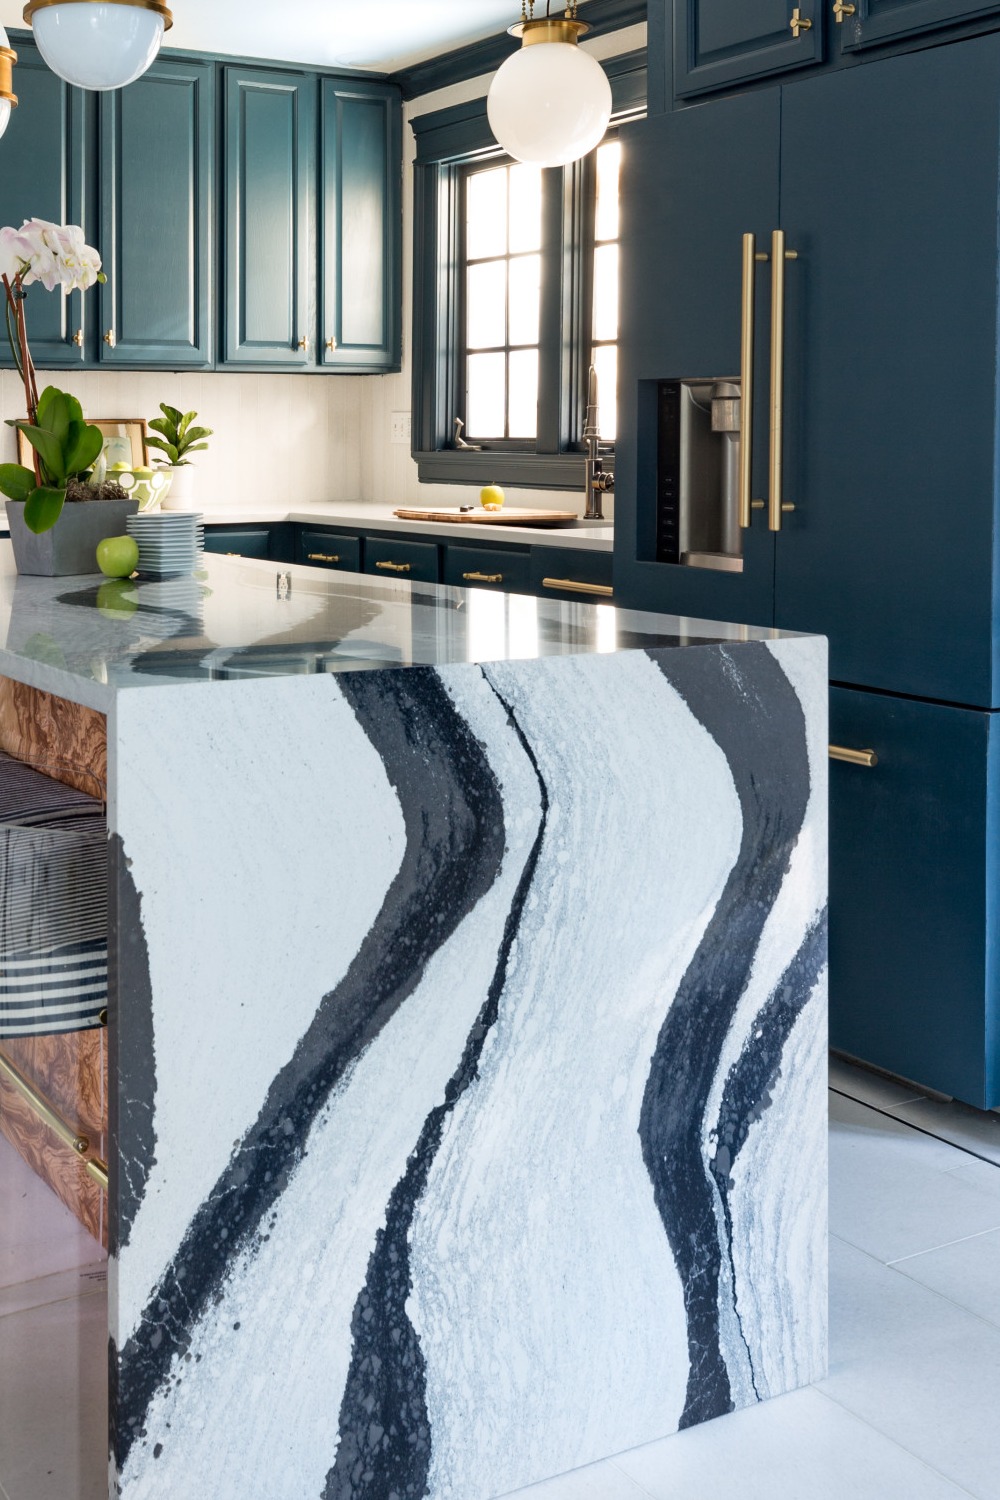 White Cambria Quartz Countertops Glossy Blue Cabinets Backsplash Porcelain Floor Tiles